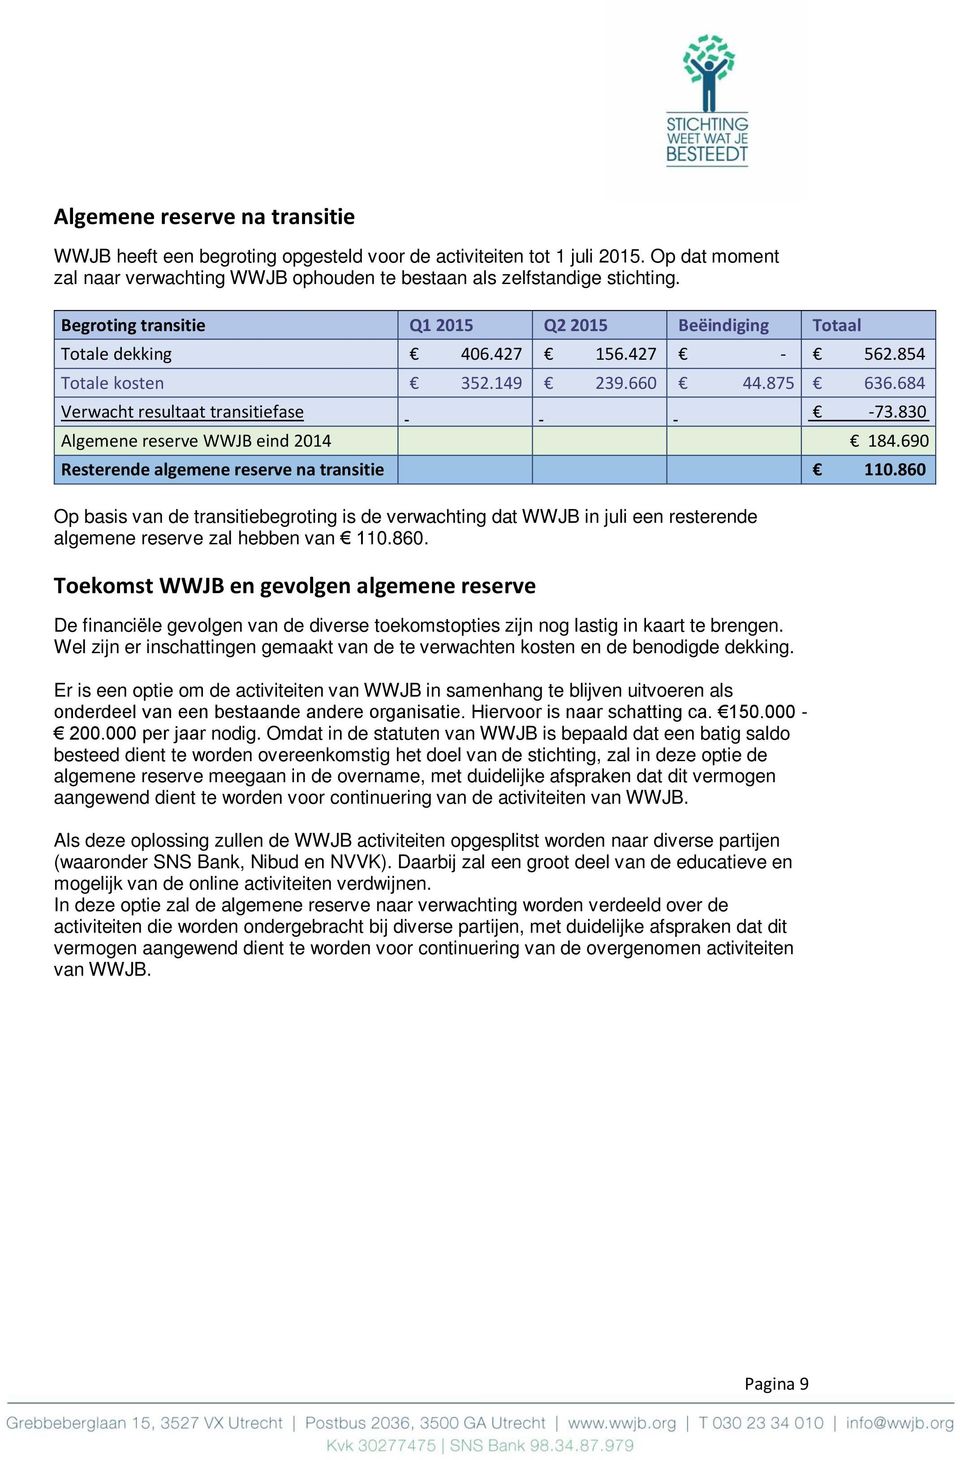 830 Algemene reserve WWJB eind 2014 184.690 Resterende algemene reserve na transitie 110.